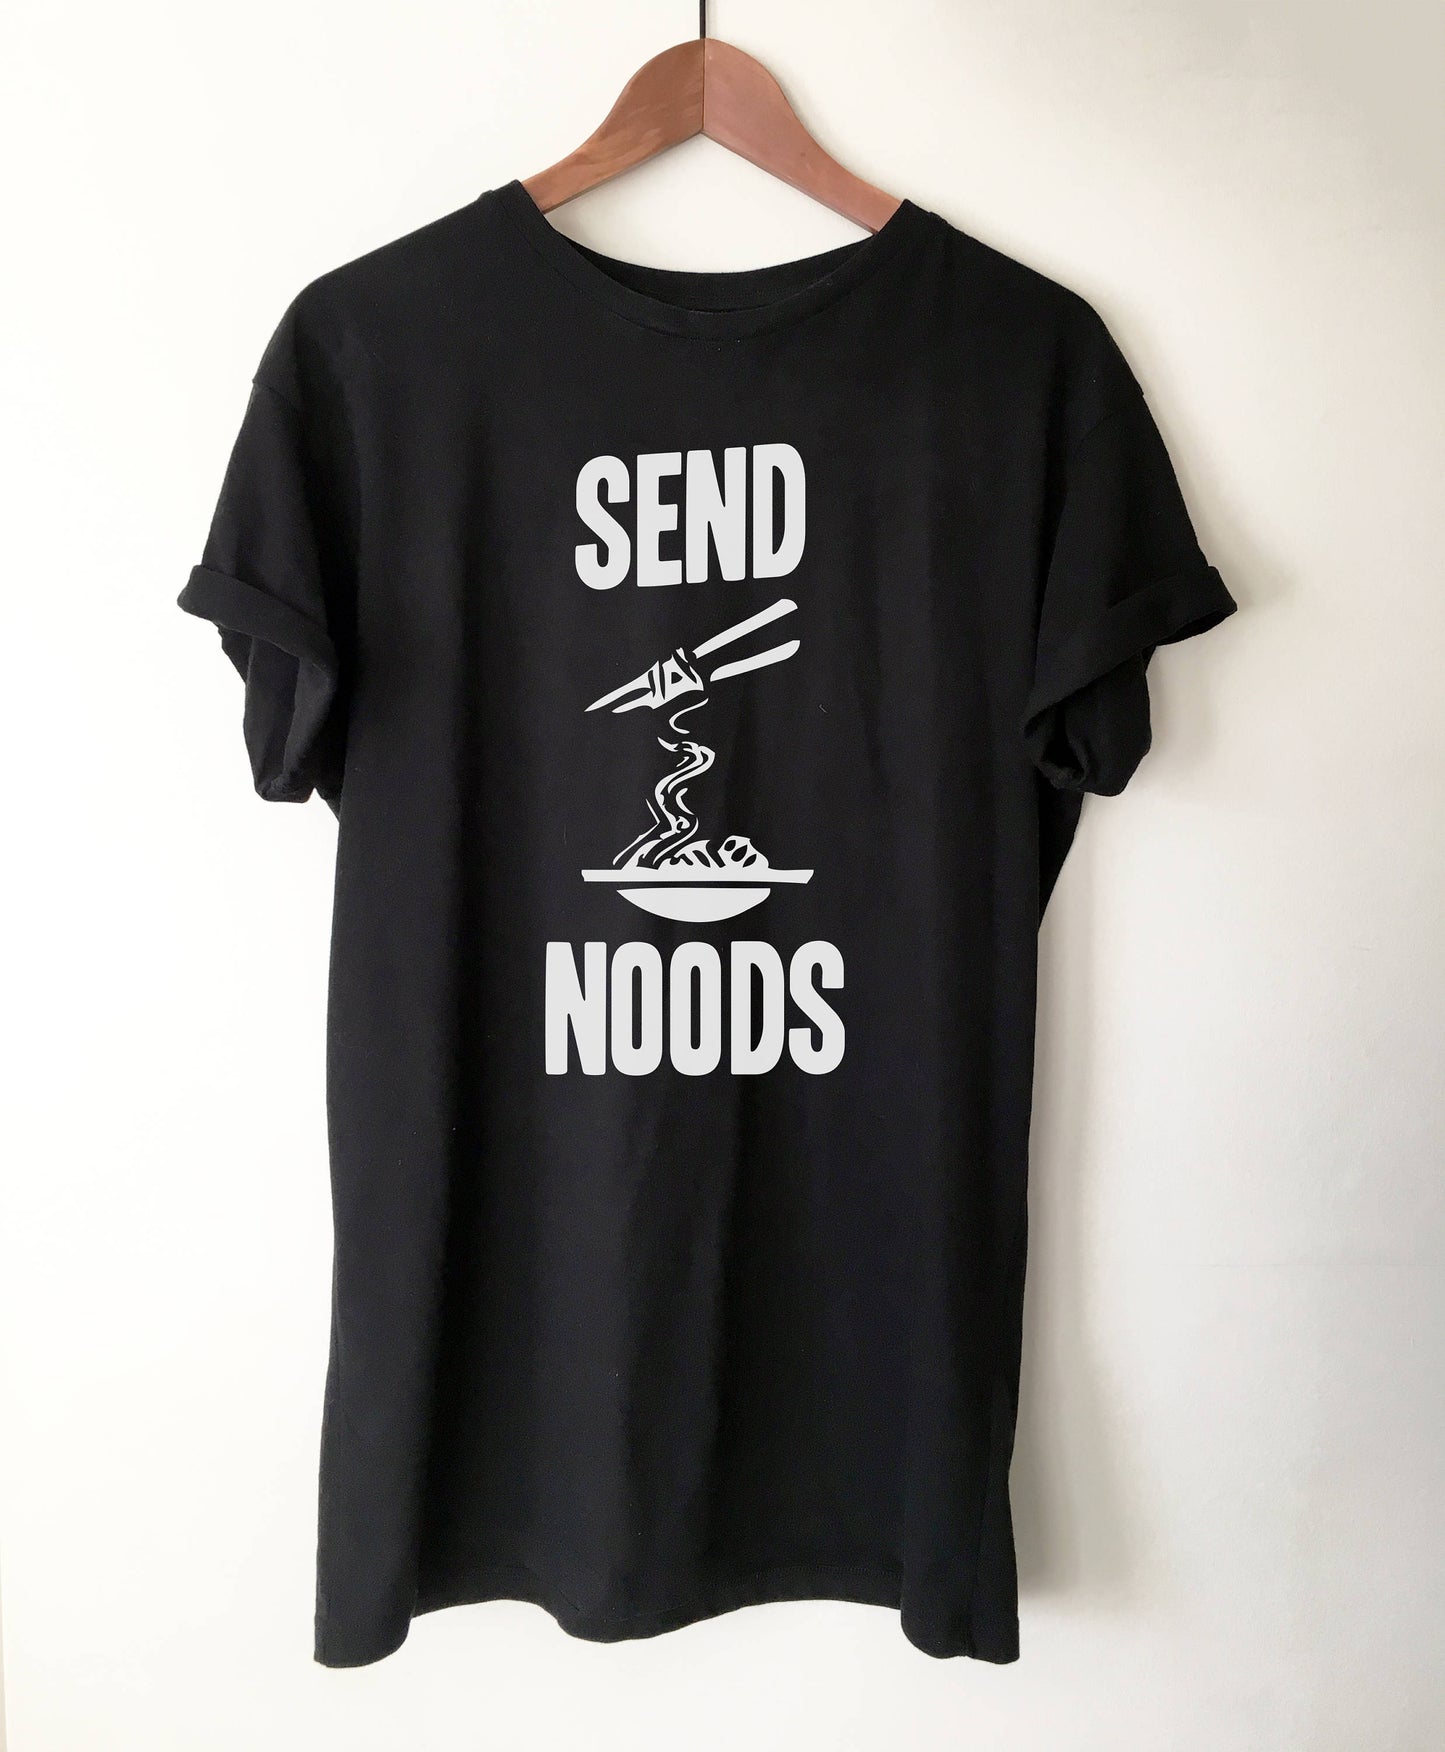 Send Noods Unisex T-Shirt - Noodle Shirt, Ramen Shirt, Ramen Noodles Shirt, College Student Shirt, Noodles Shirt, Foodie Shirt, College Gift